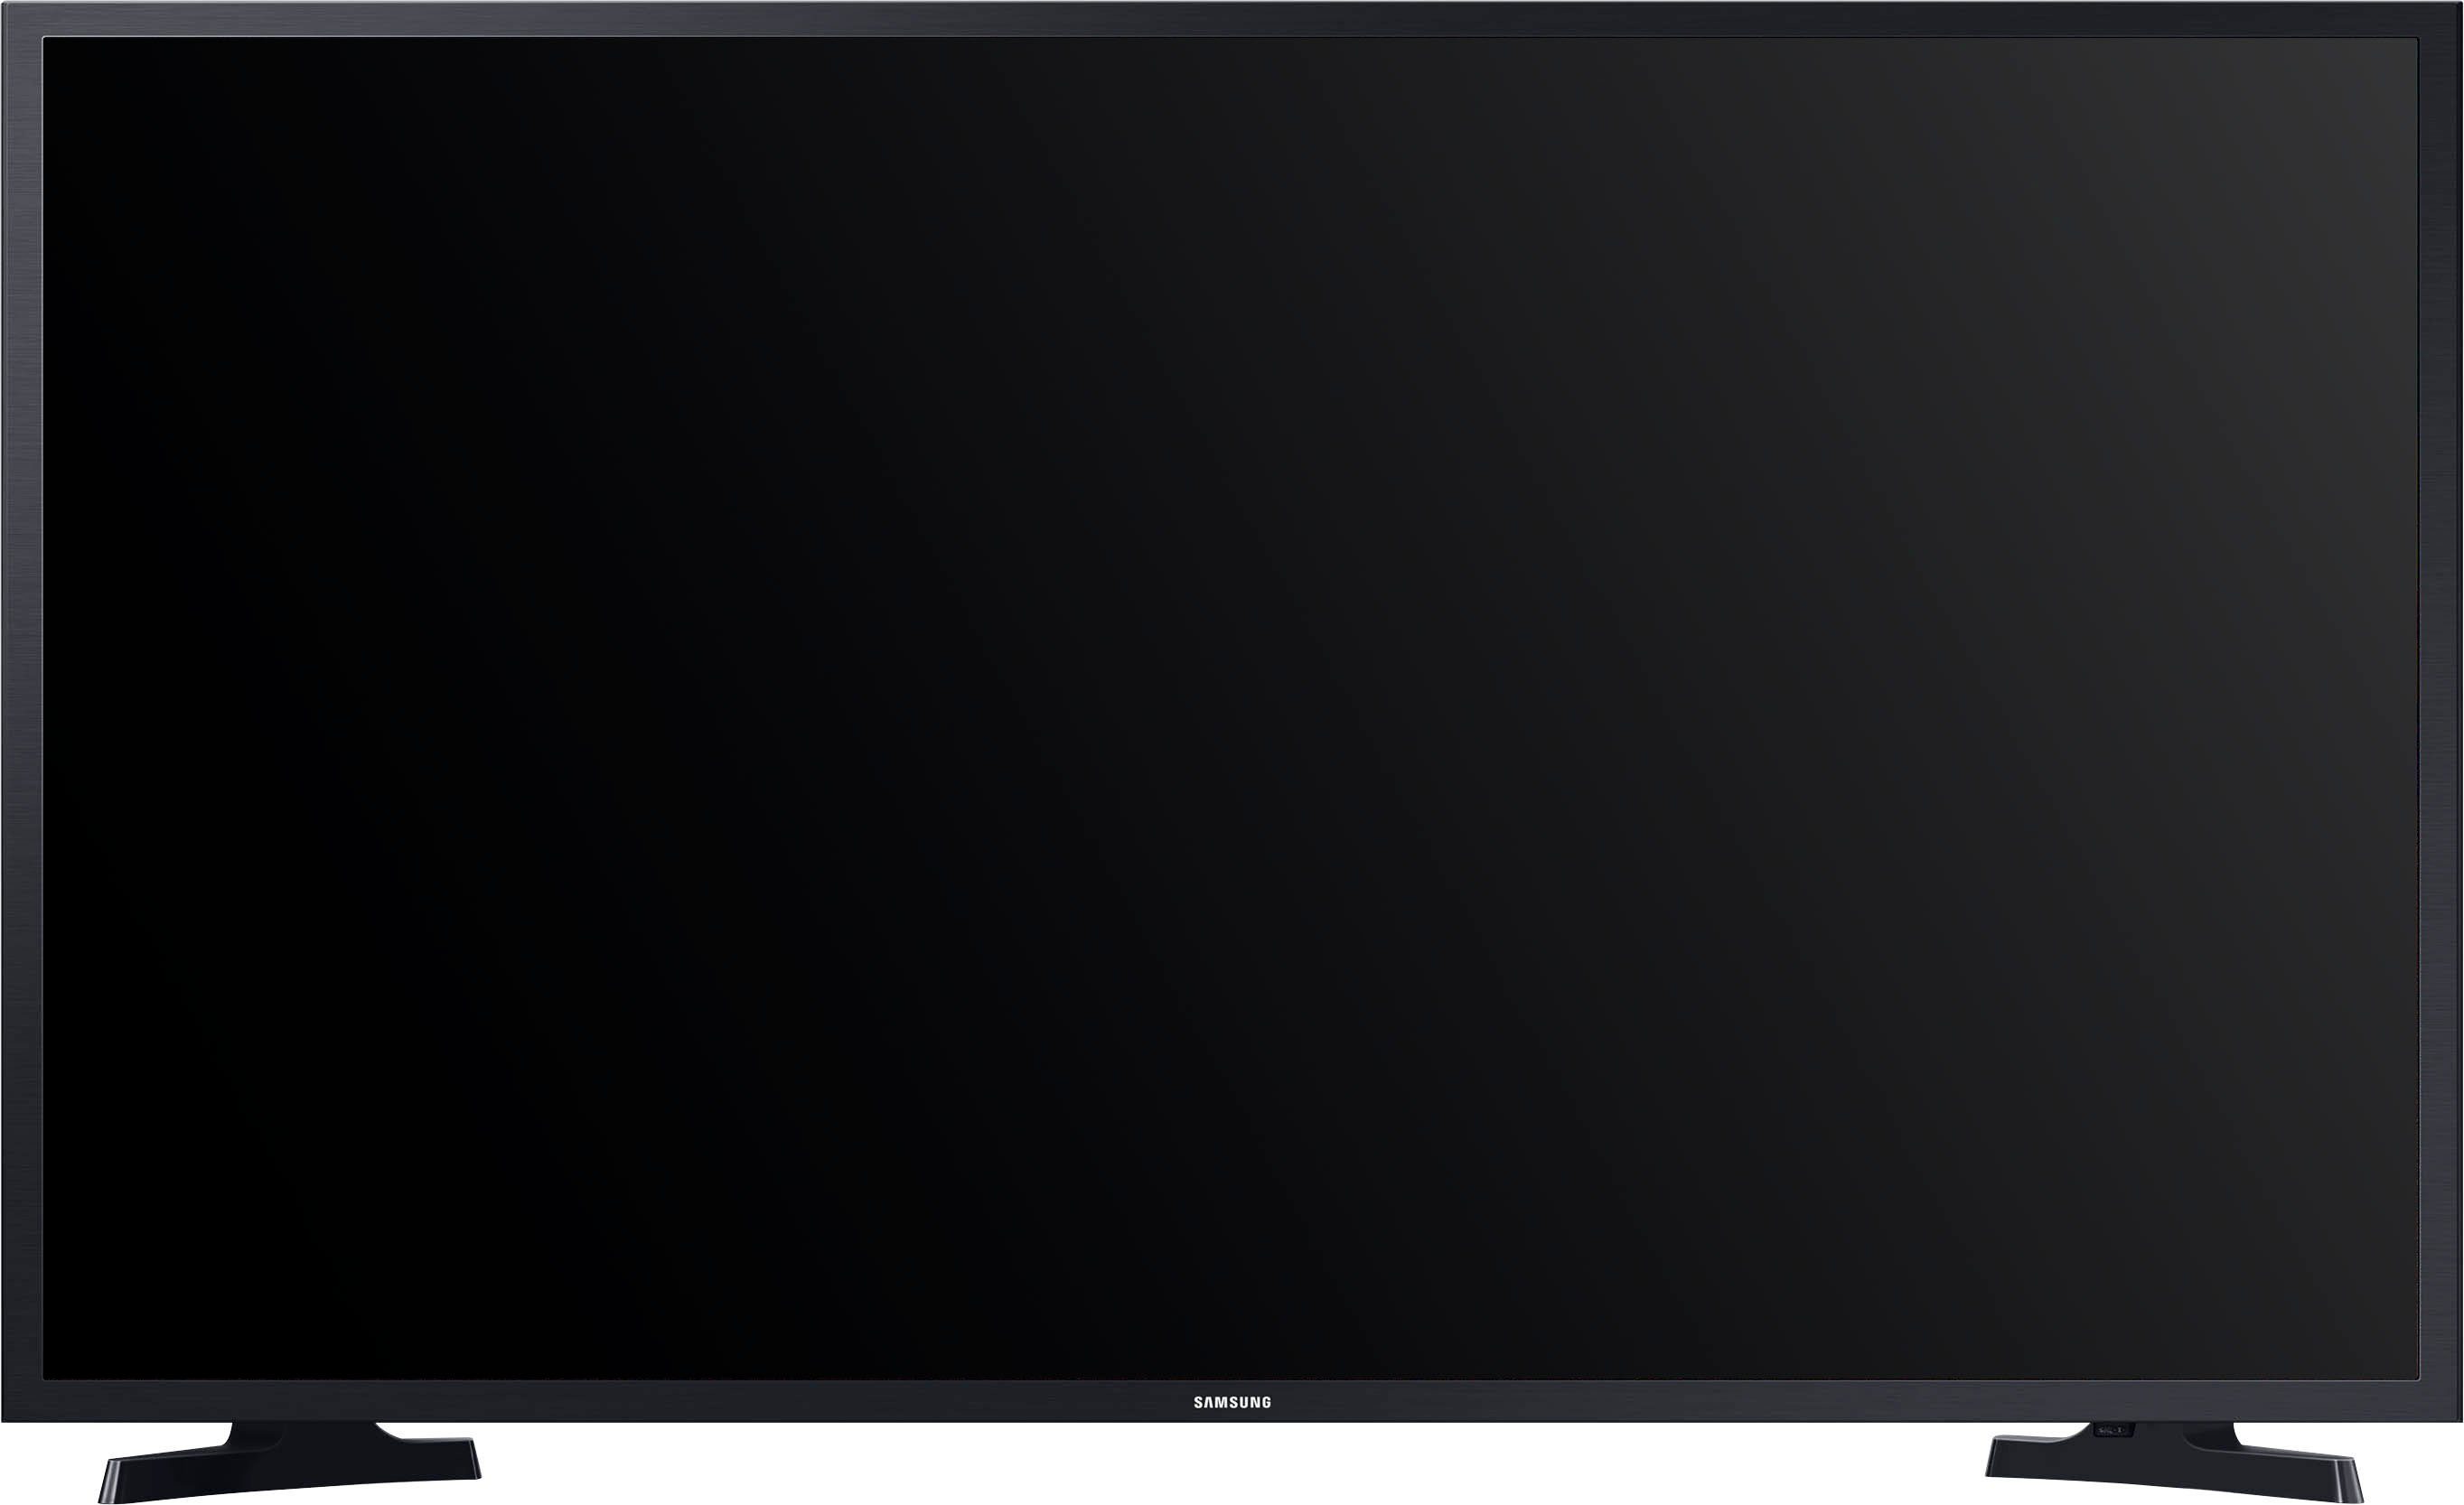 PurColor,HDR,Contrast Smart-TV, GU32T5379CD LED-Fernseher Zoll, cm/32 Samsung Enhancer) (80